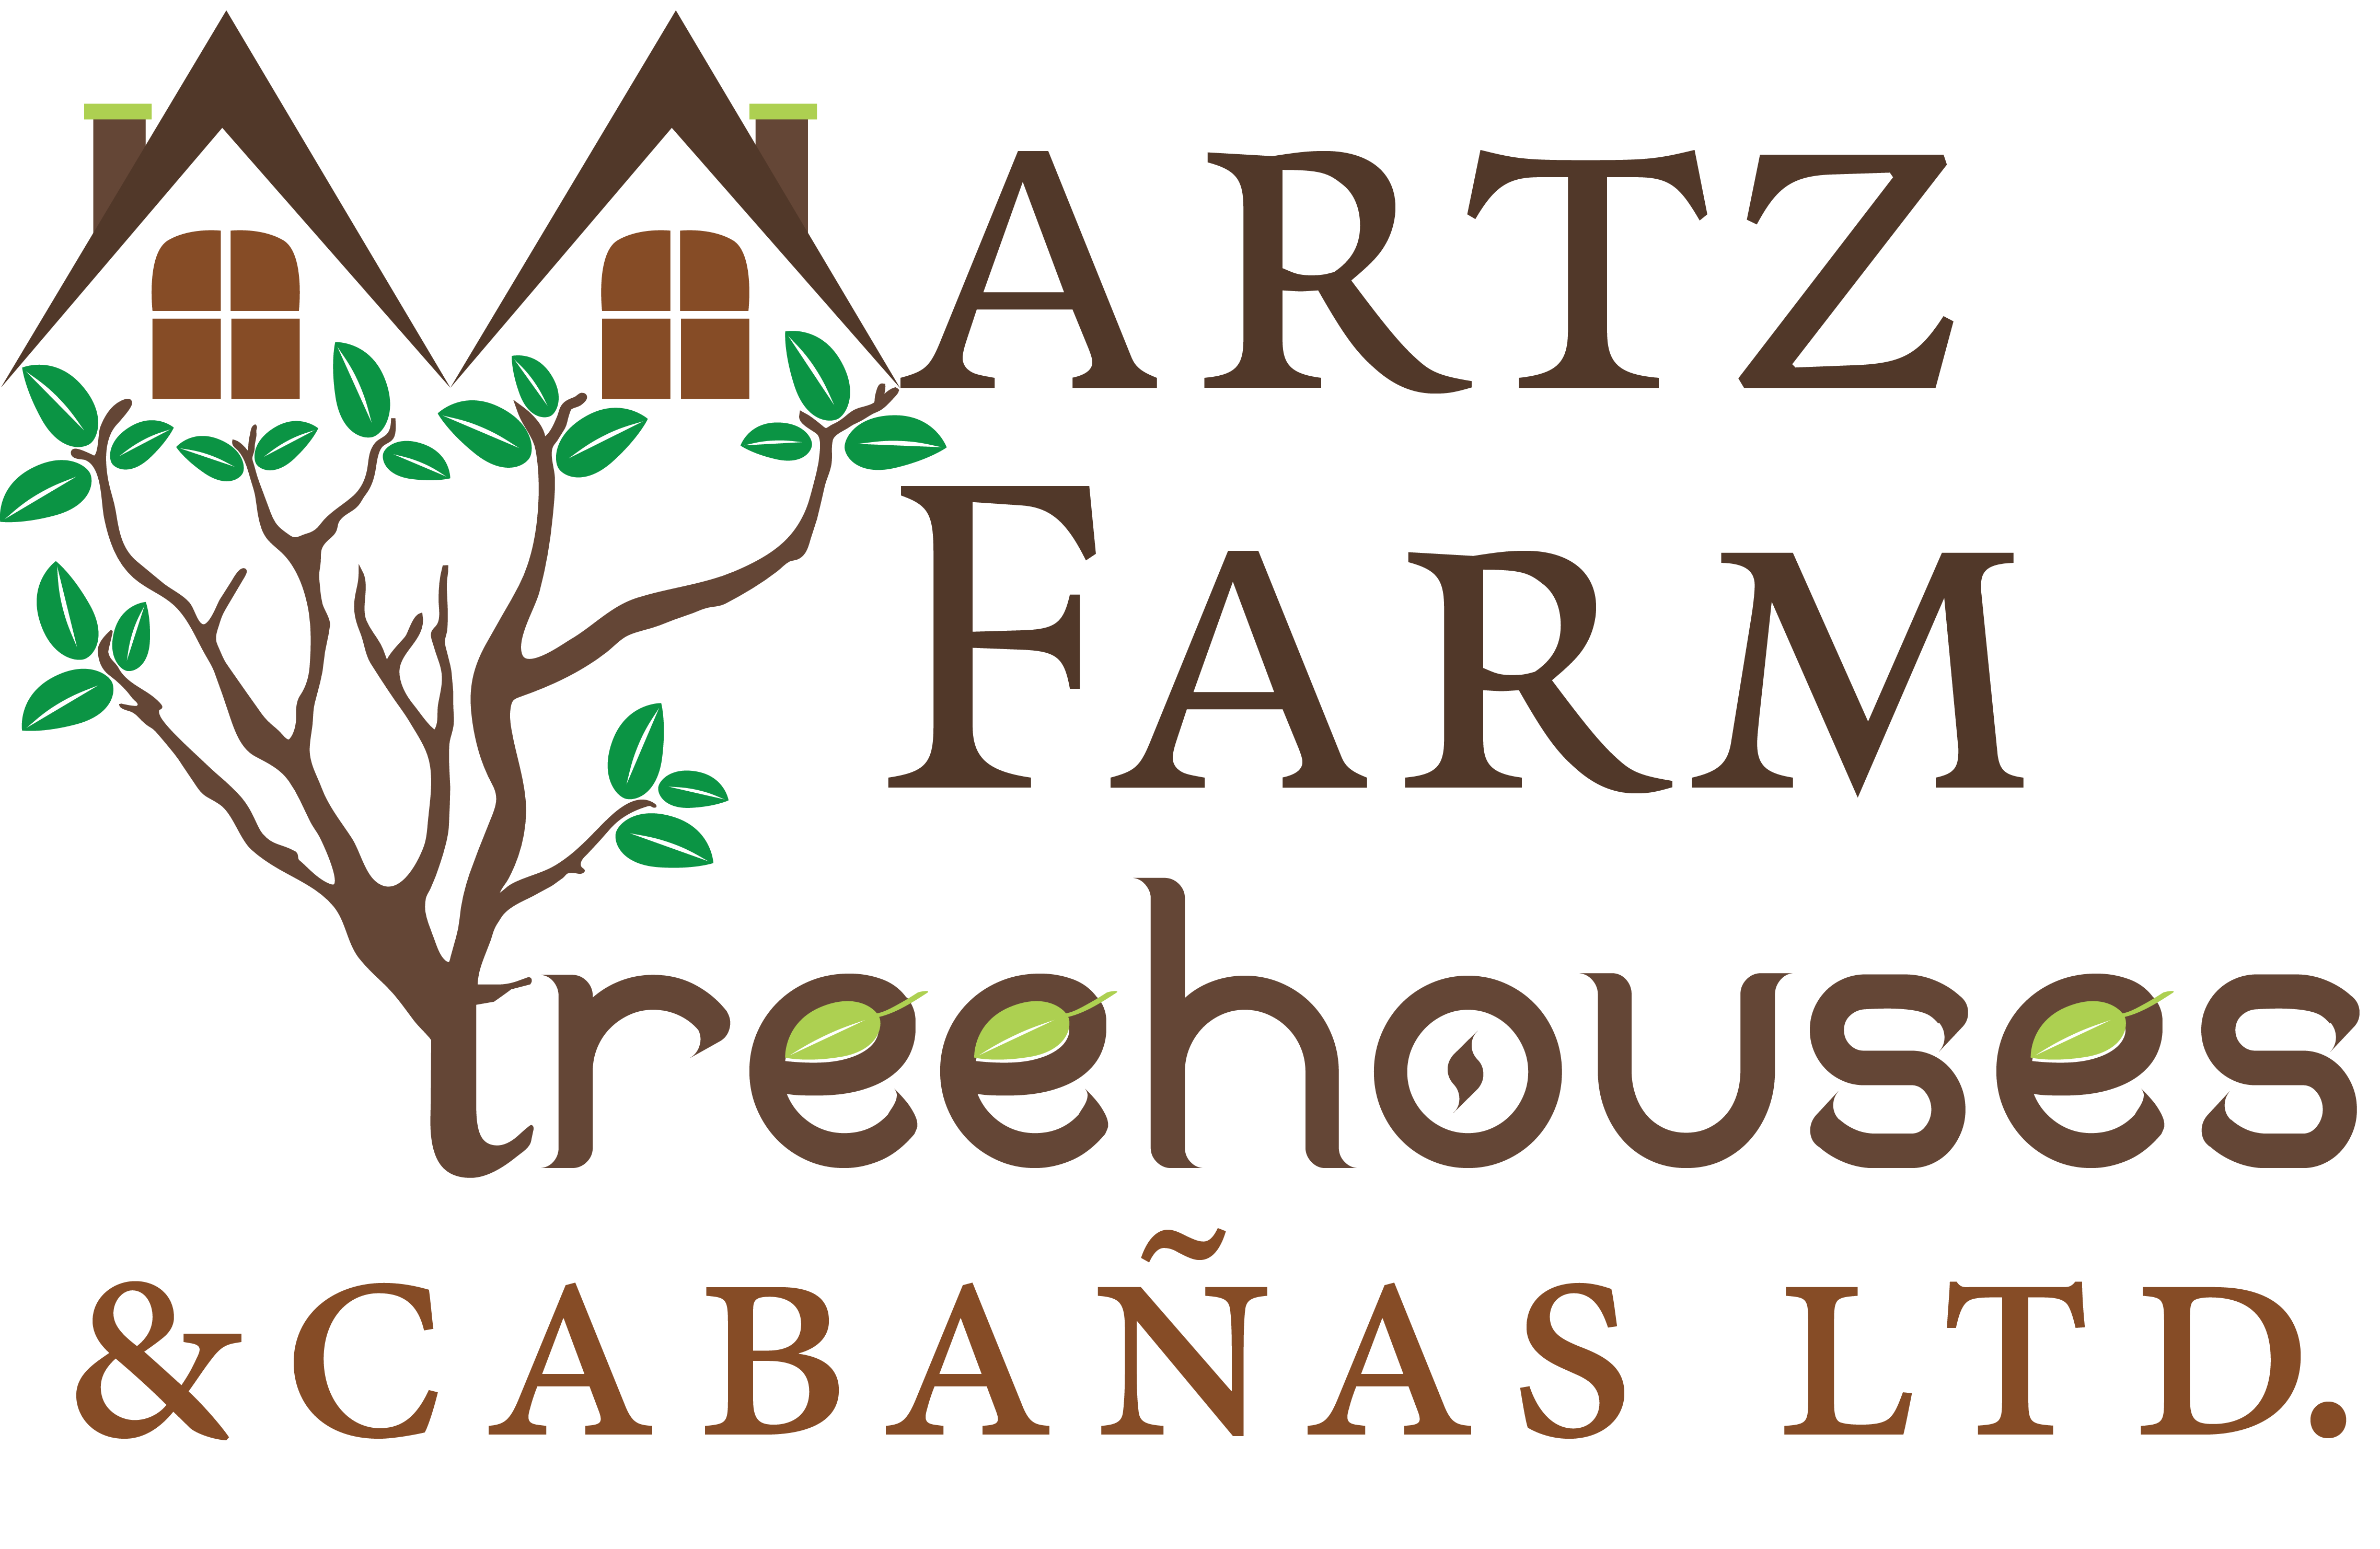 Martz Logo - Martz Farm Treehouses & Cabanas